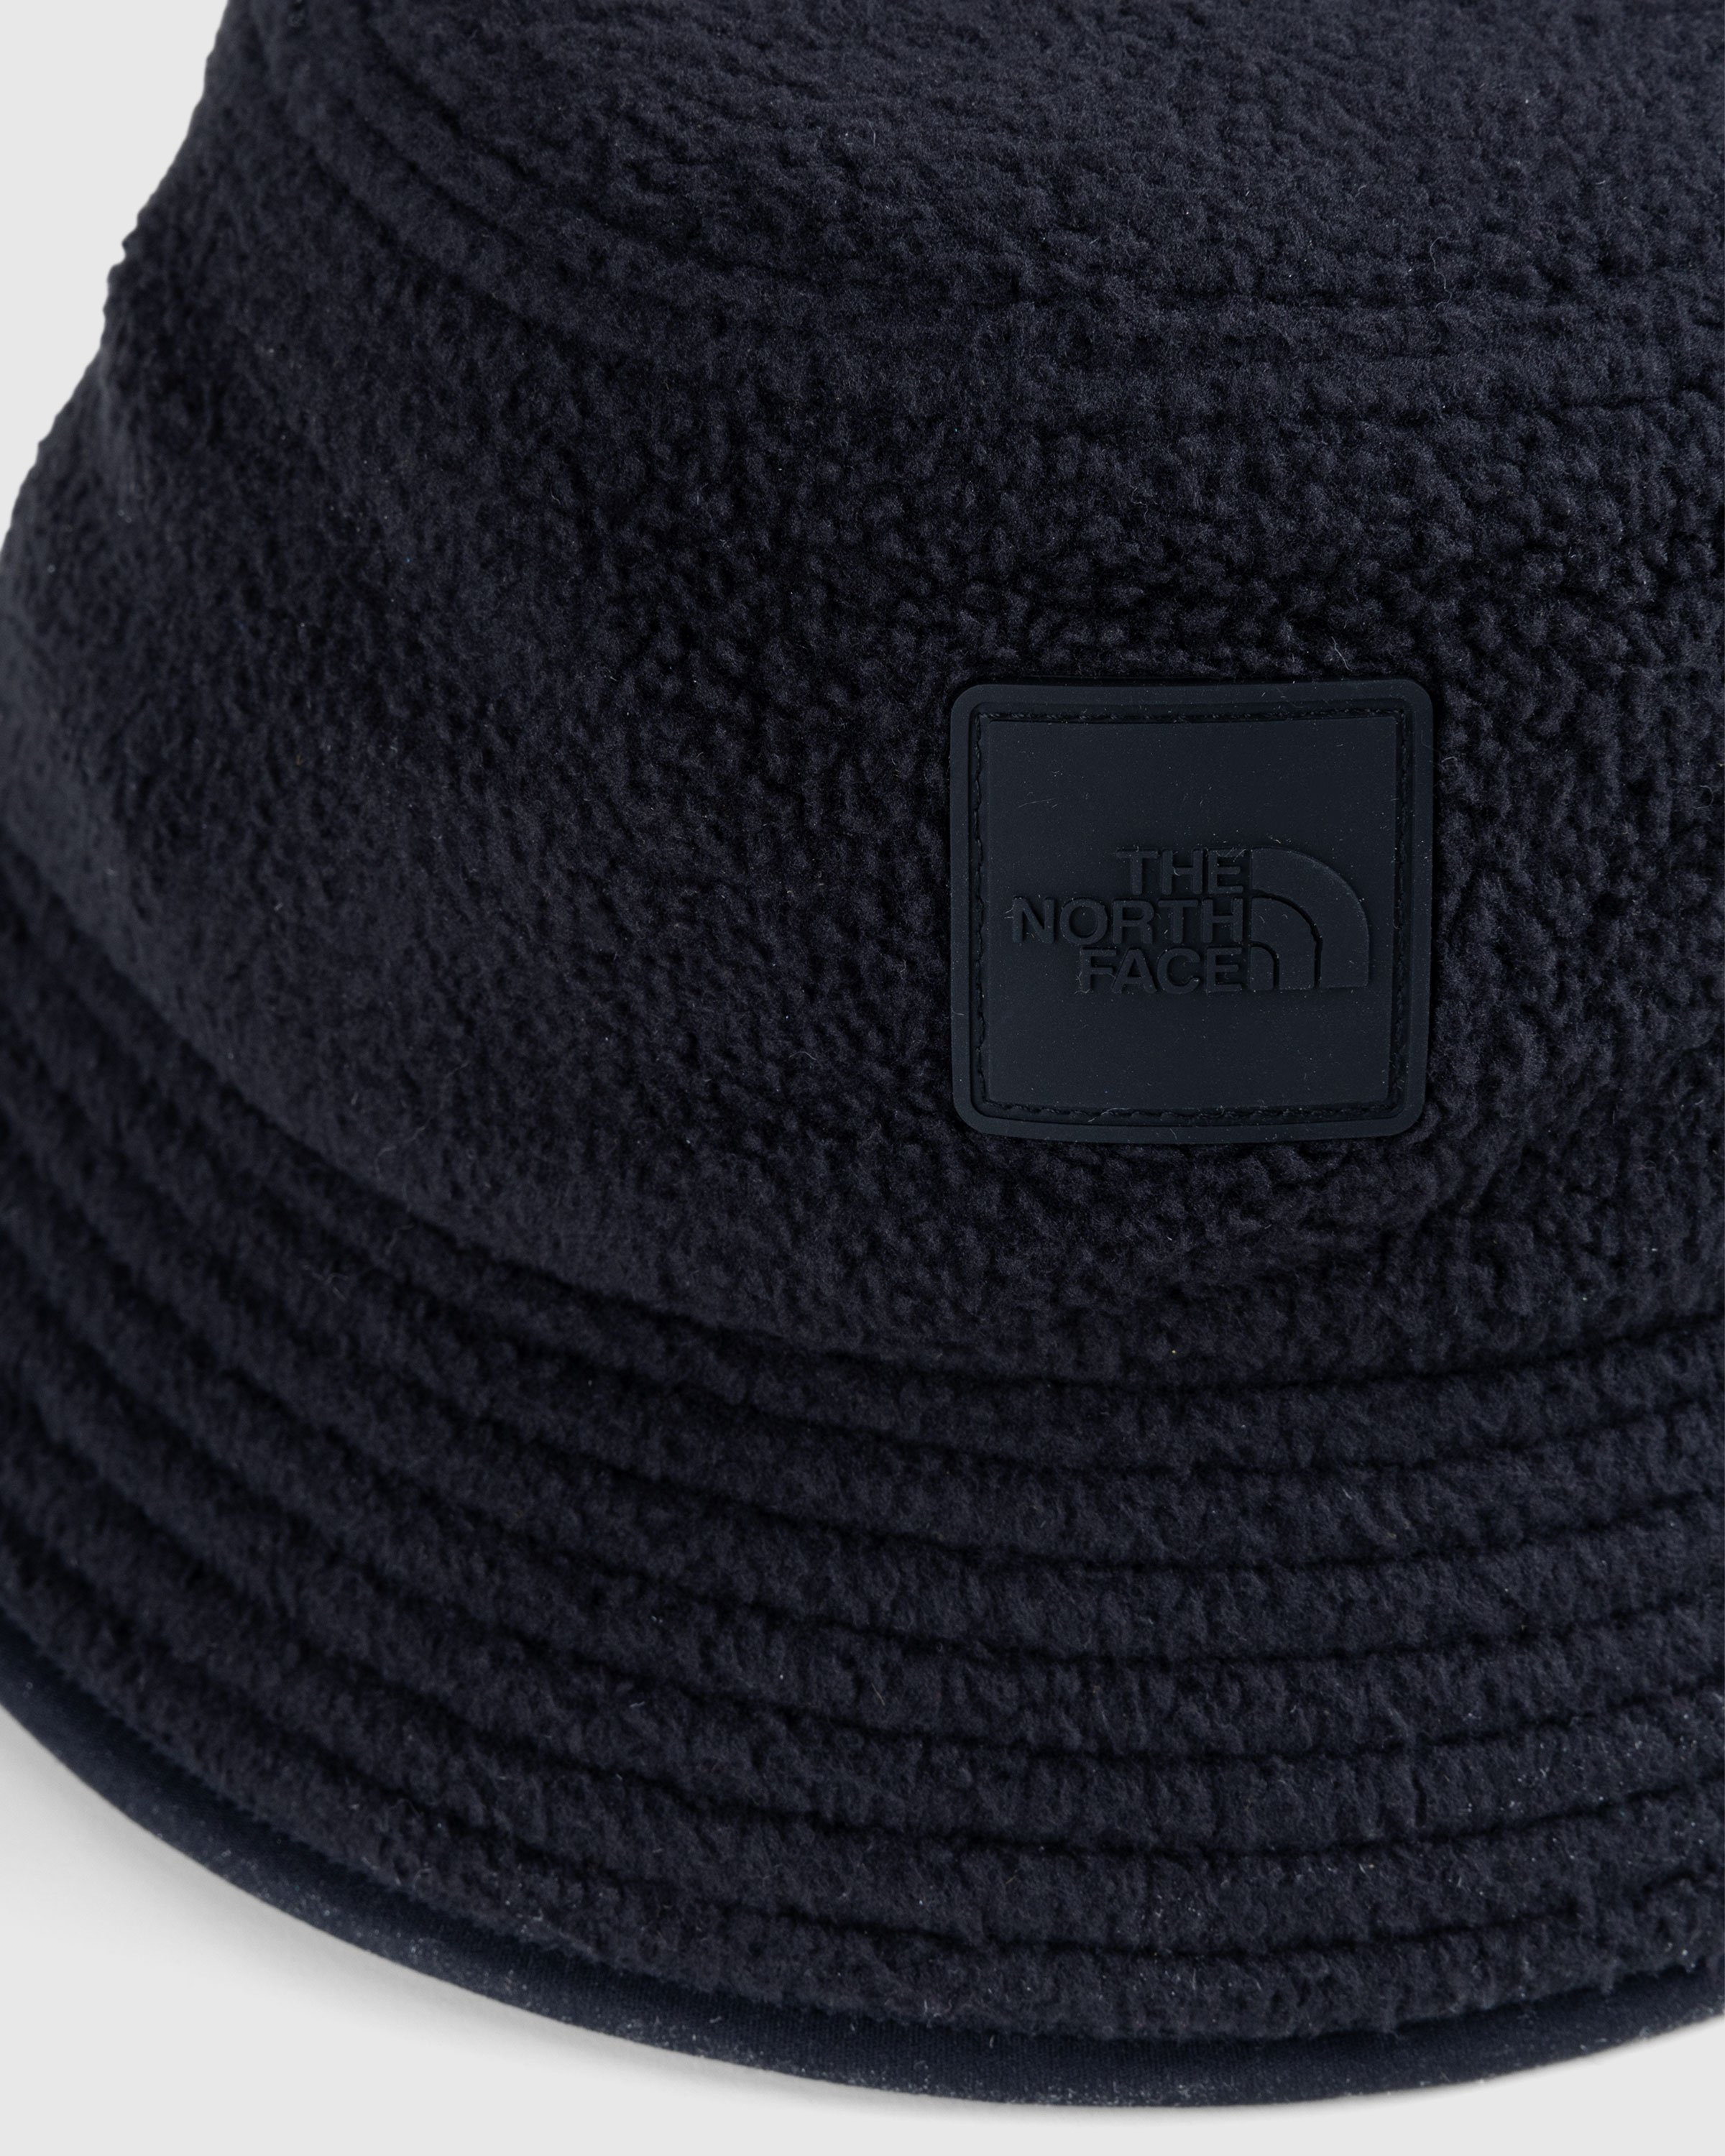 The North Face - Fleeski Street Bucket Hat Black - Accessories - Black - Image 4